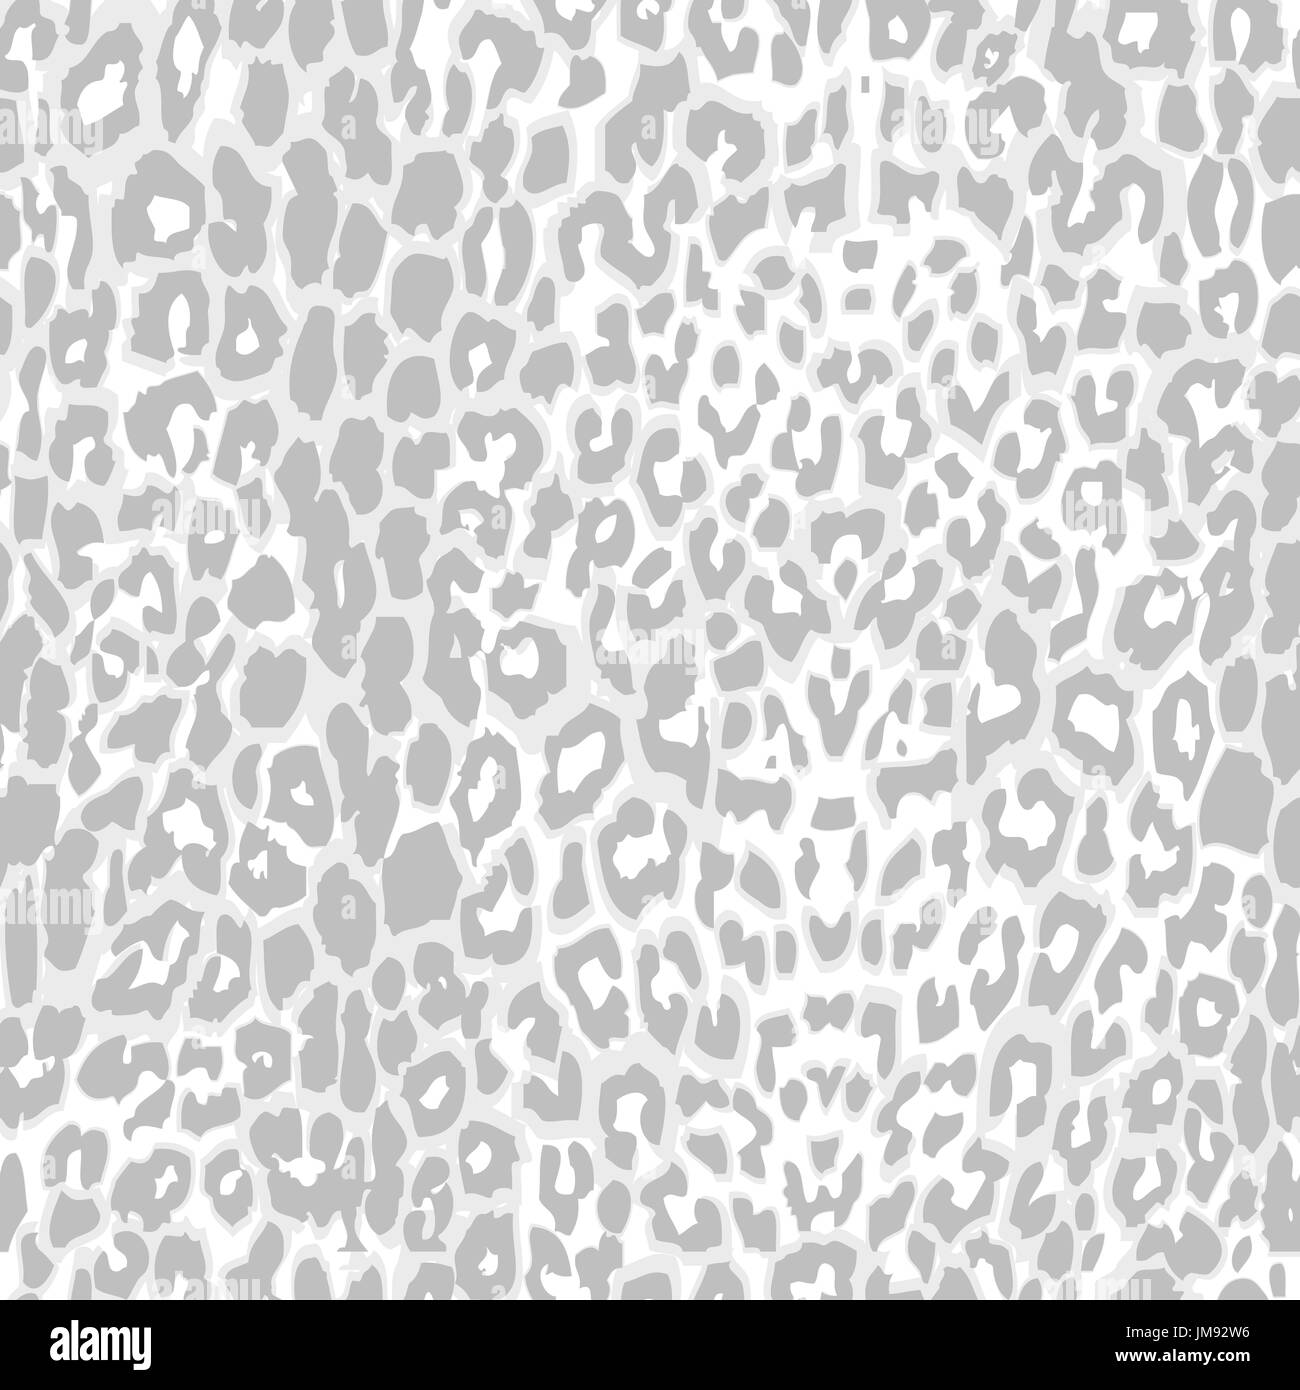 leopard print pattern gray scale vector. seamless grey leopard